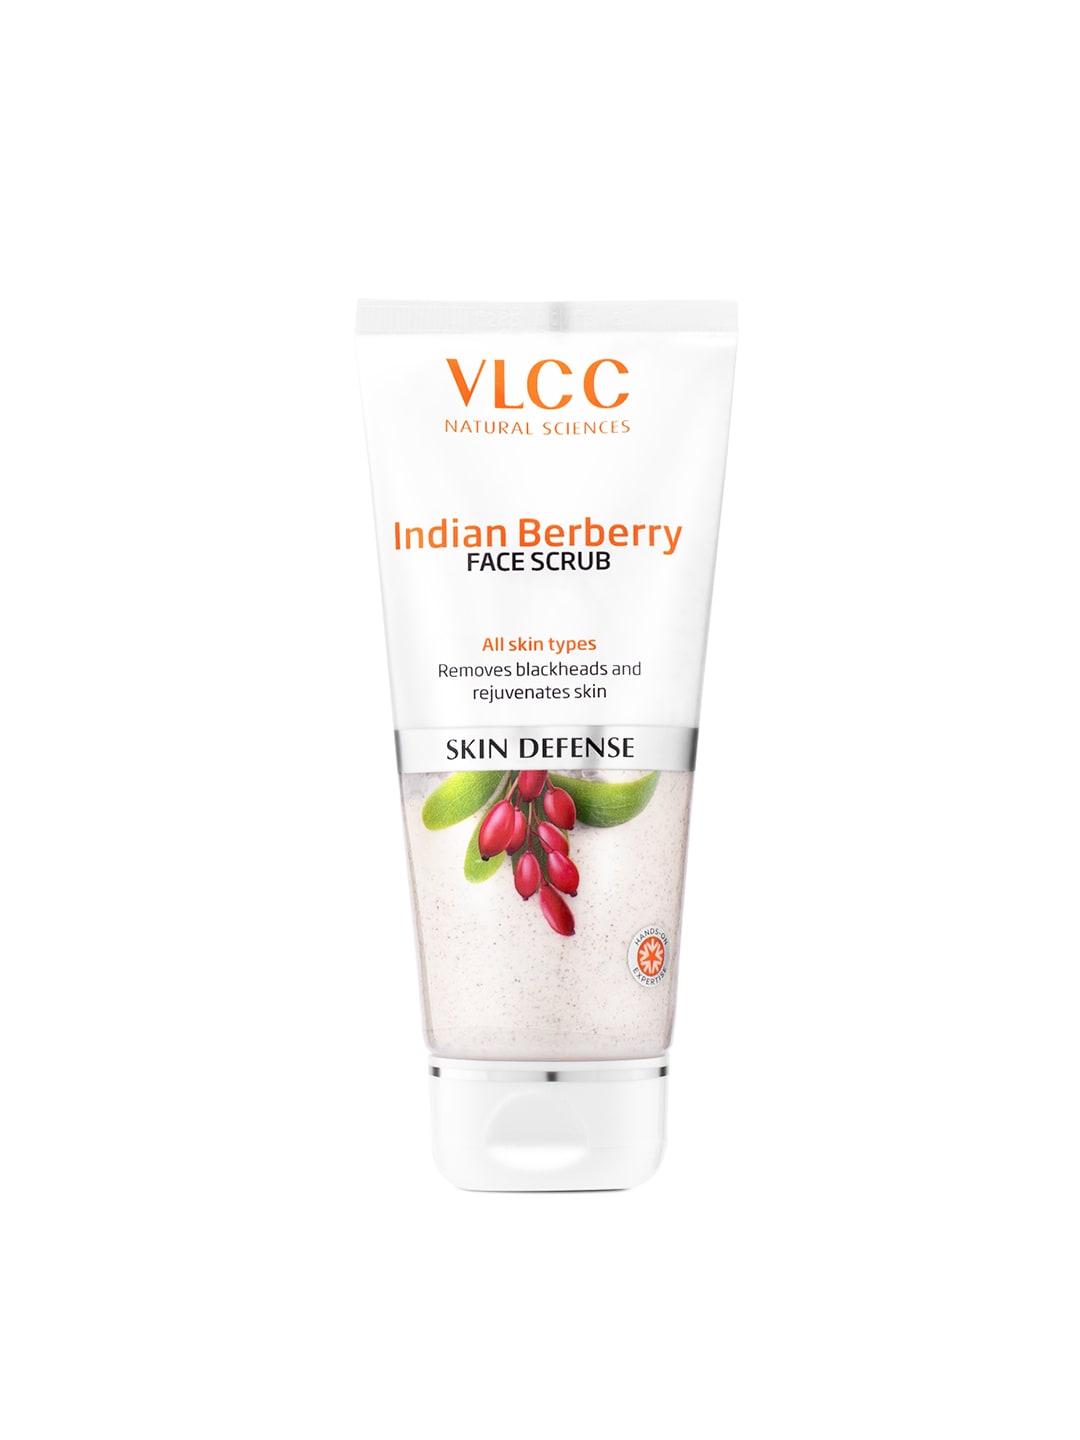 VLCC Indian Berberry Face Scrub 100 g